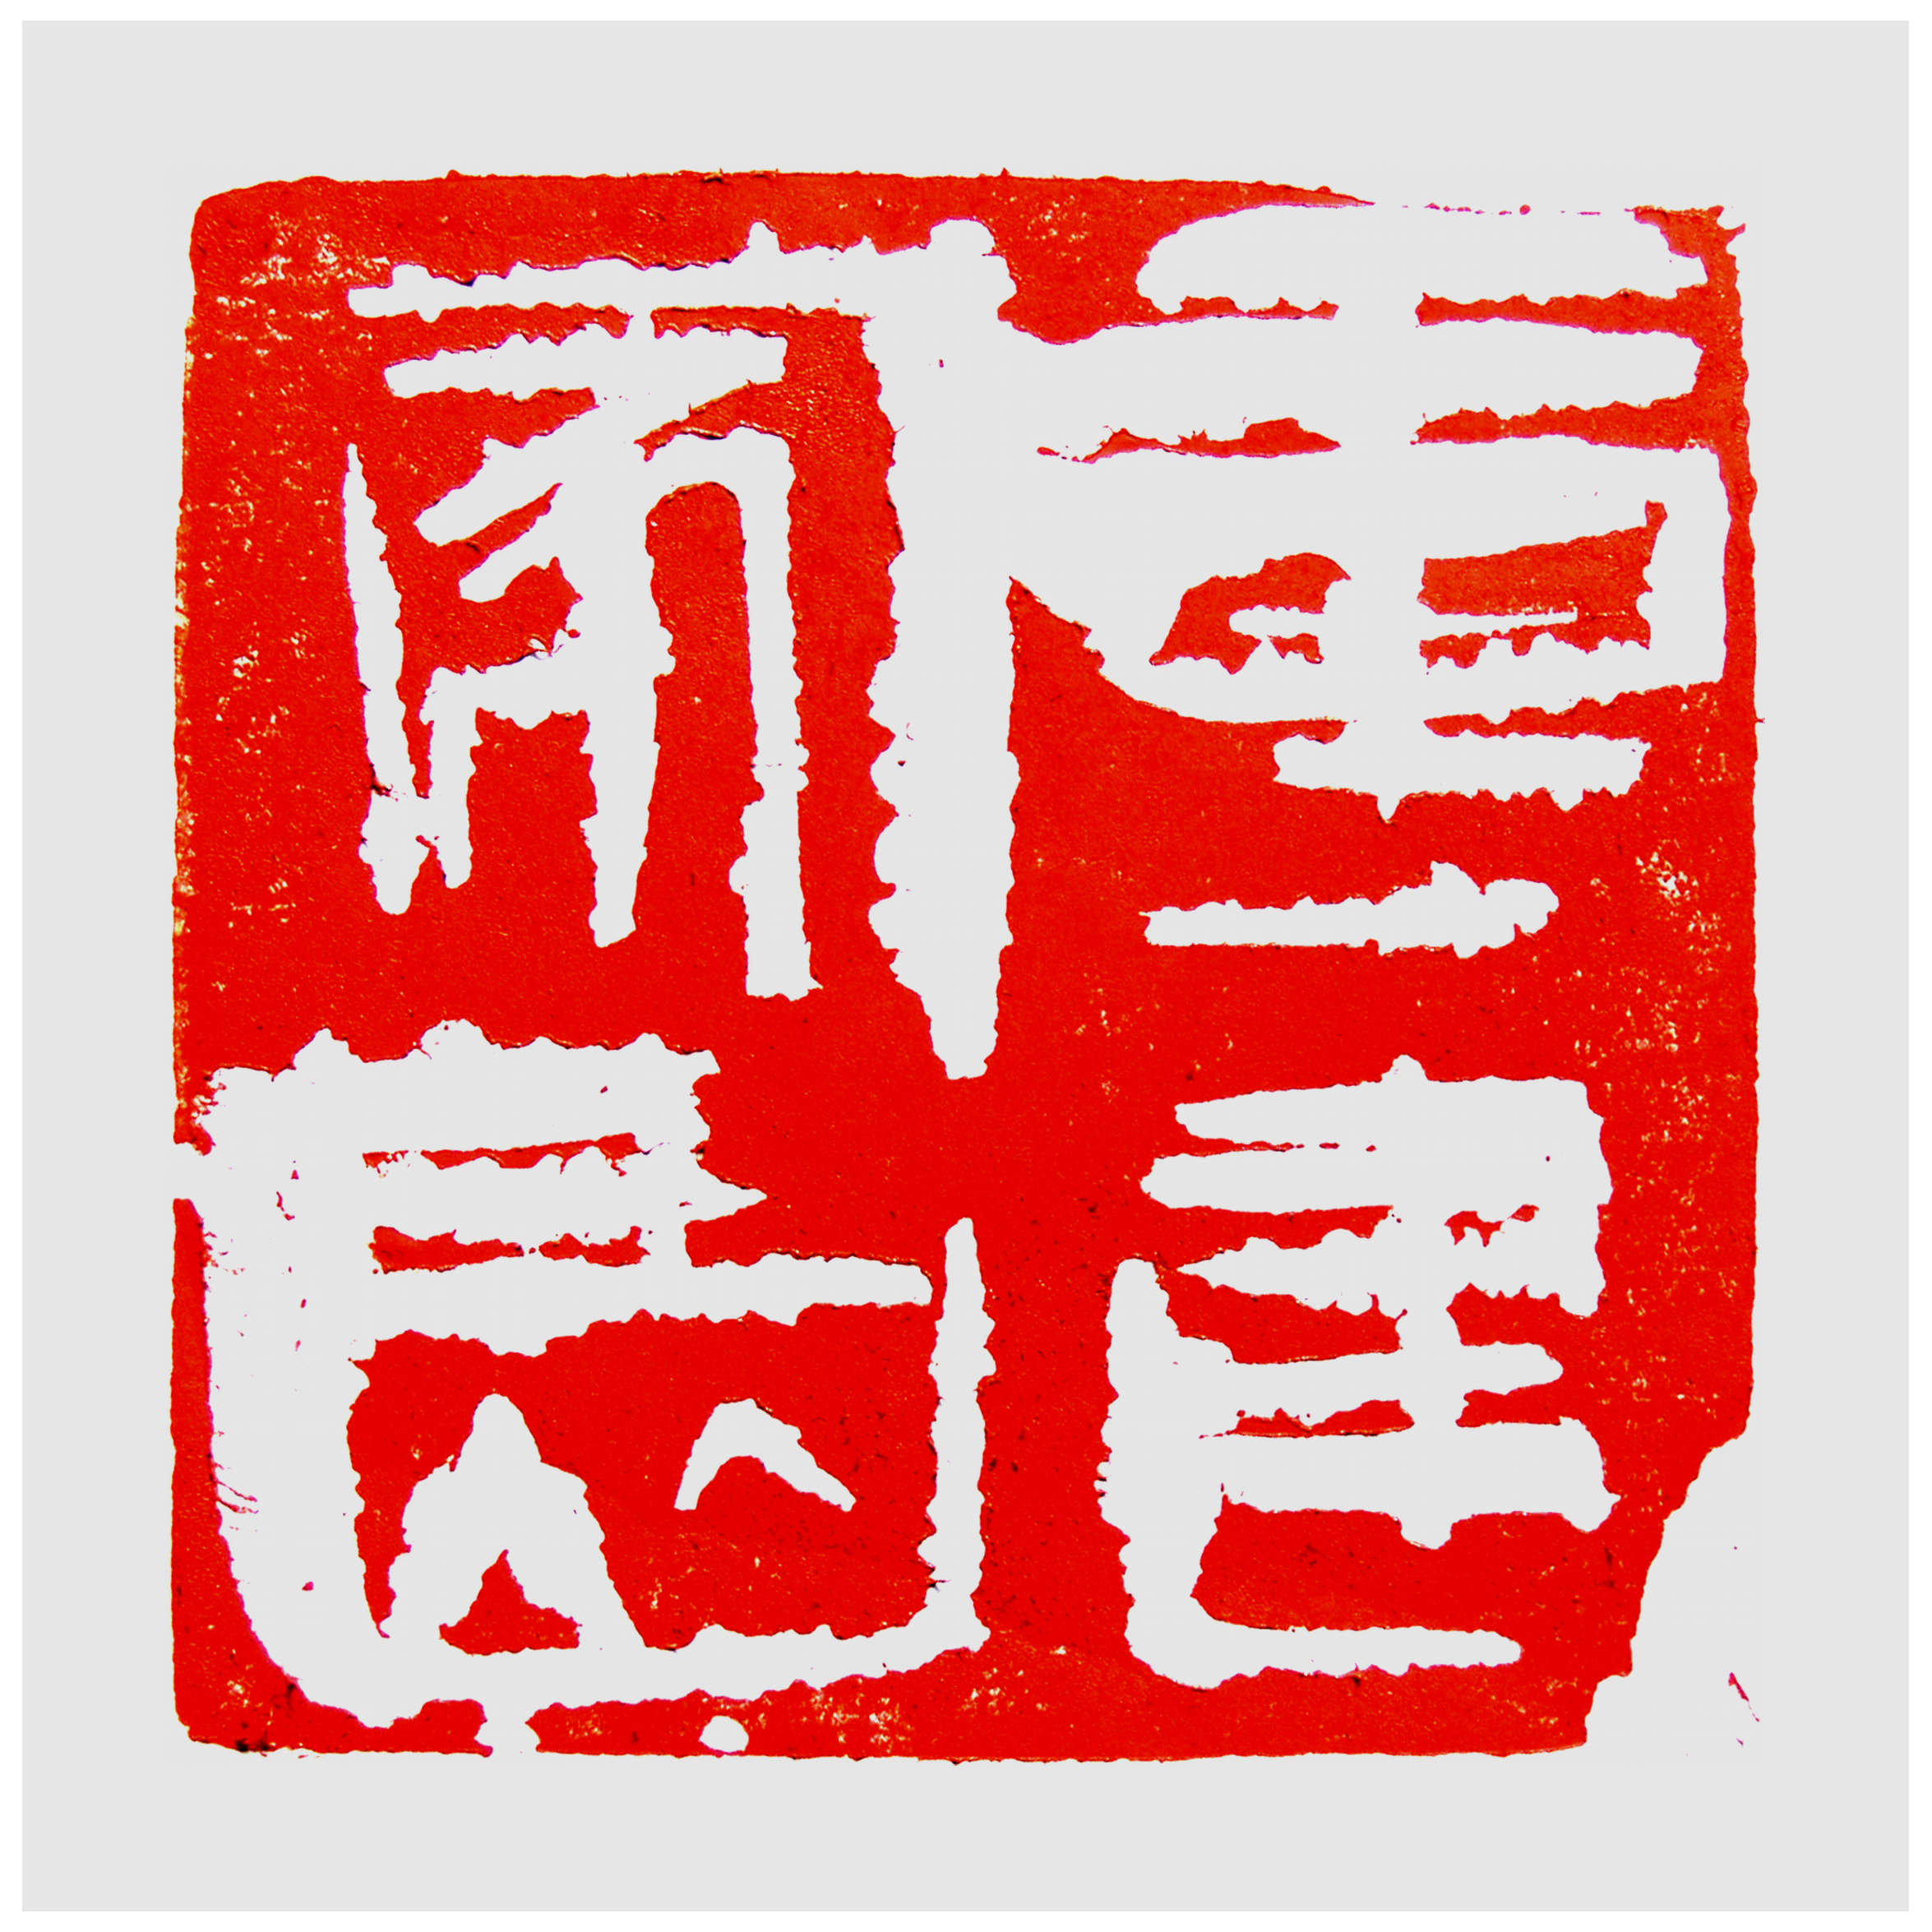 Qi Hong (Sai Koh) 's freehand brushwork style semi-seal script leisure seal carving (Chinese seal engraving, seal cutting) imprint: Rebuilding Homes, 90×90mm, stone